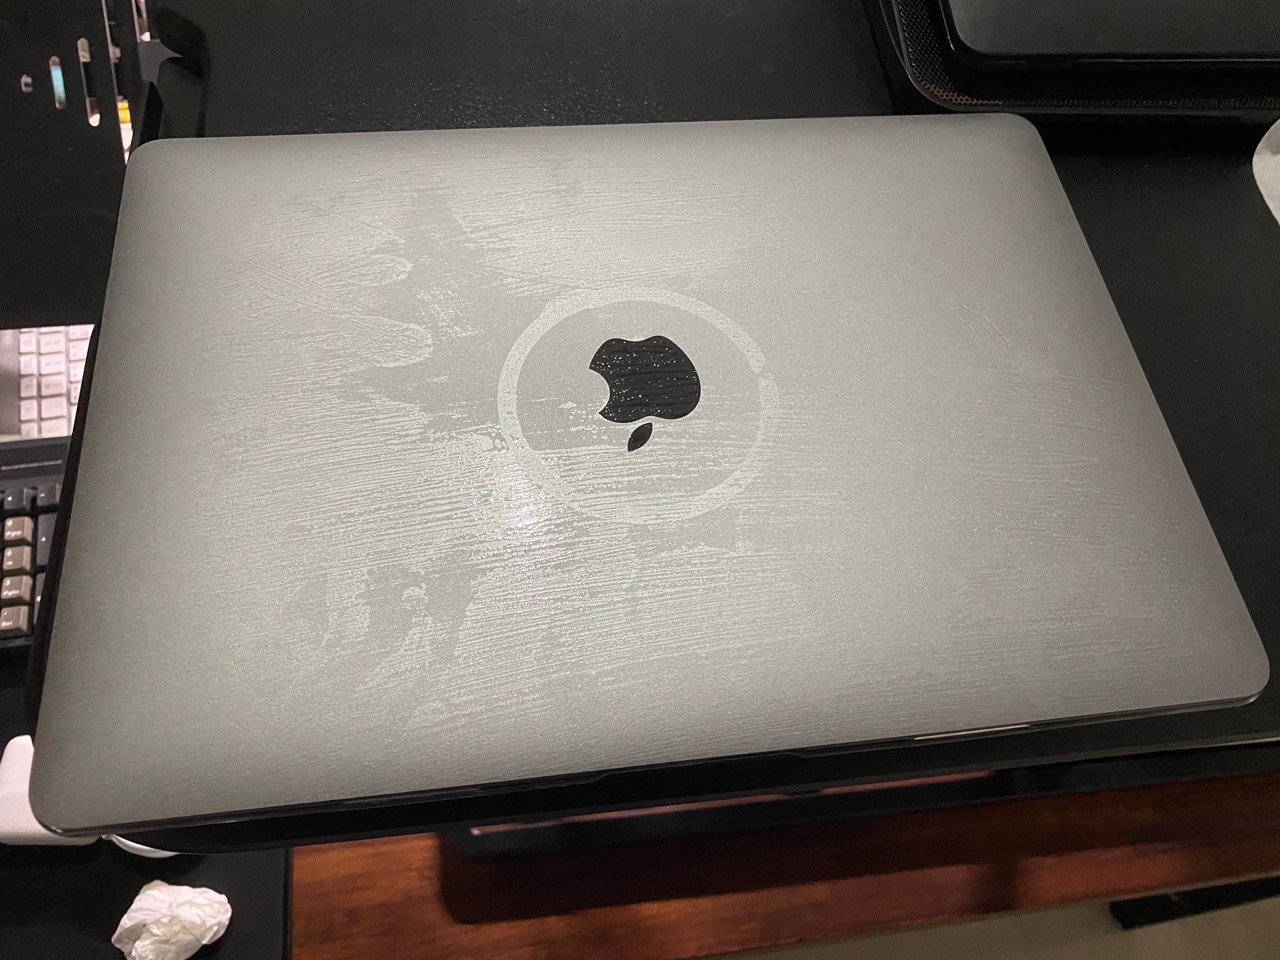 The circle trace around the apple logo on… - Apple Community